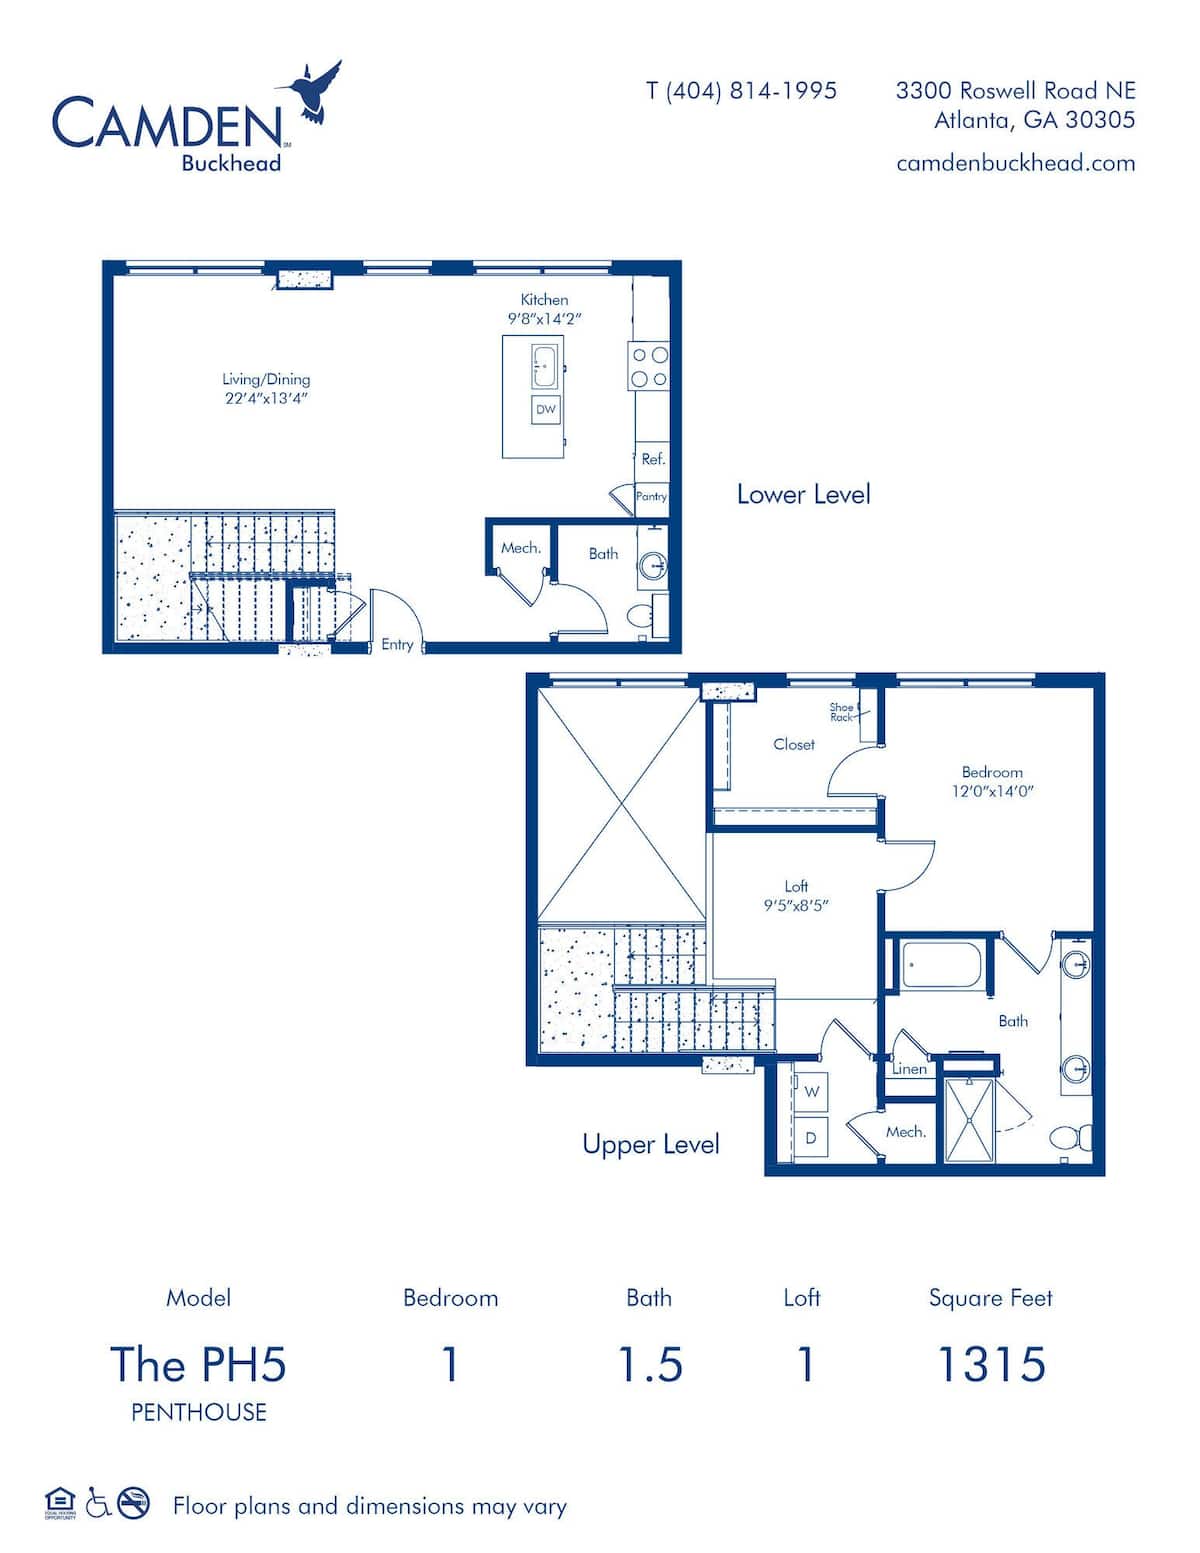 Floorplan diagram for The PH5, showing 1 bedroom